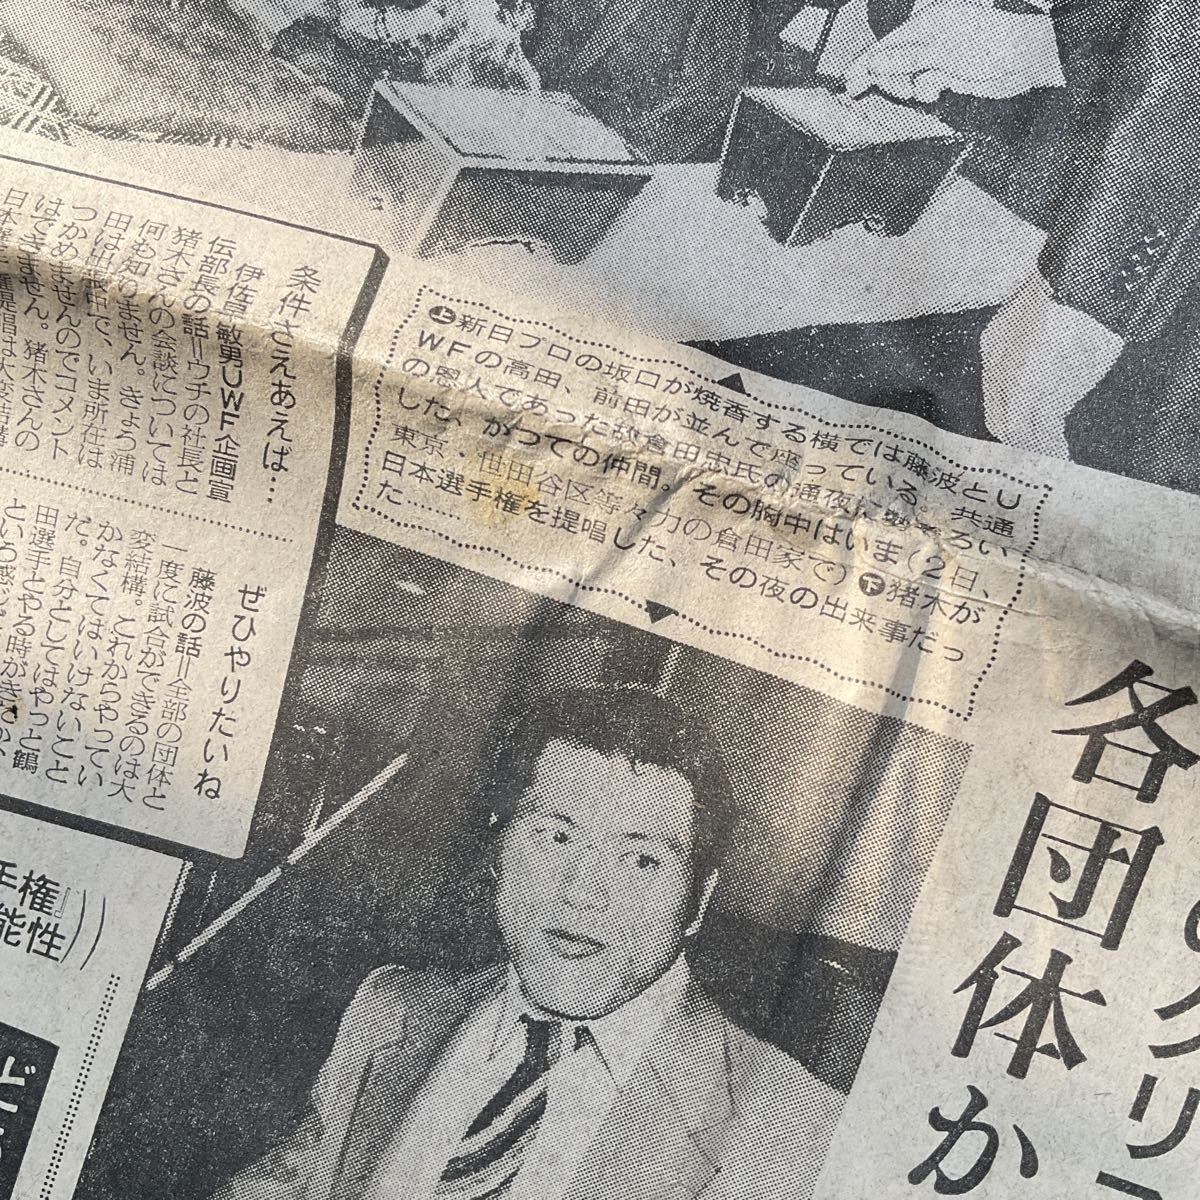  Showa Retro Tokyo спорт Showa 59 год 1984 год 10 месяц 4 Nitto spo . дерево все день Pro новый день Pro UWF новый день . line восток spo старый газета 